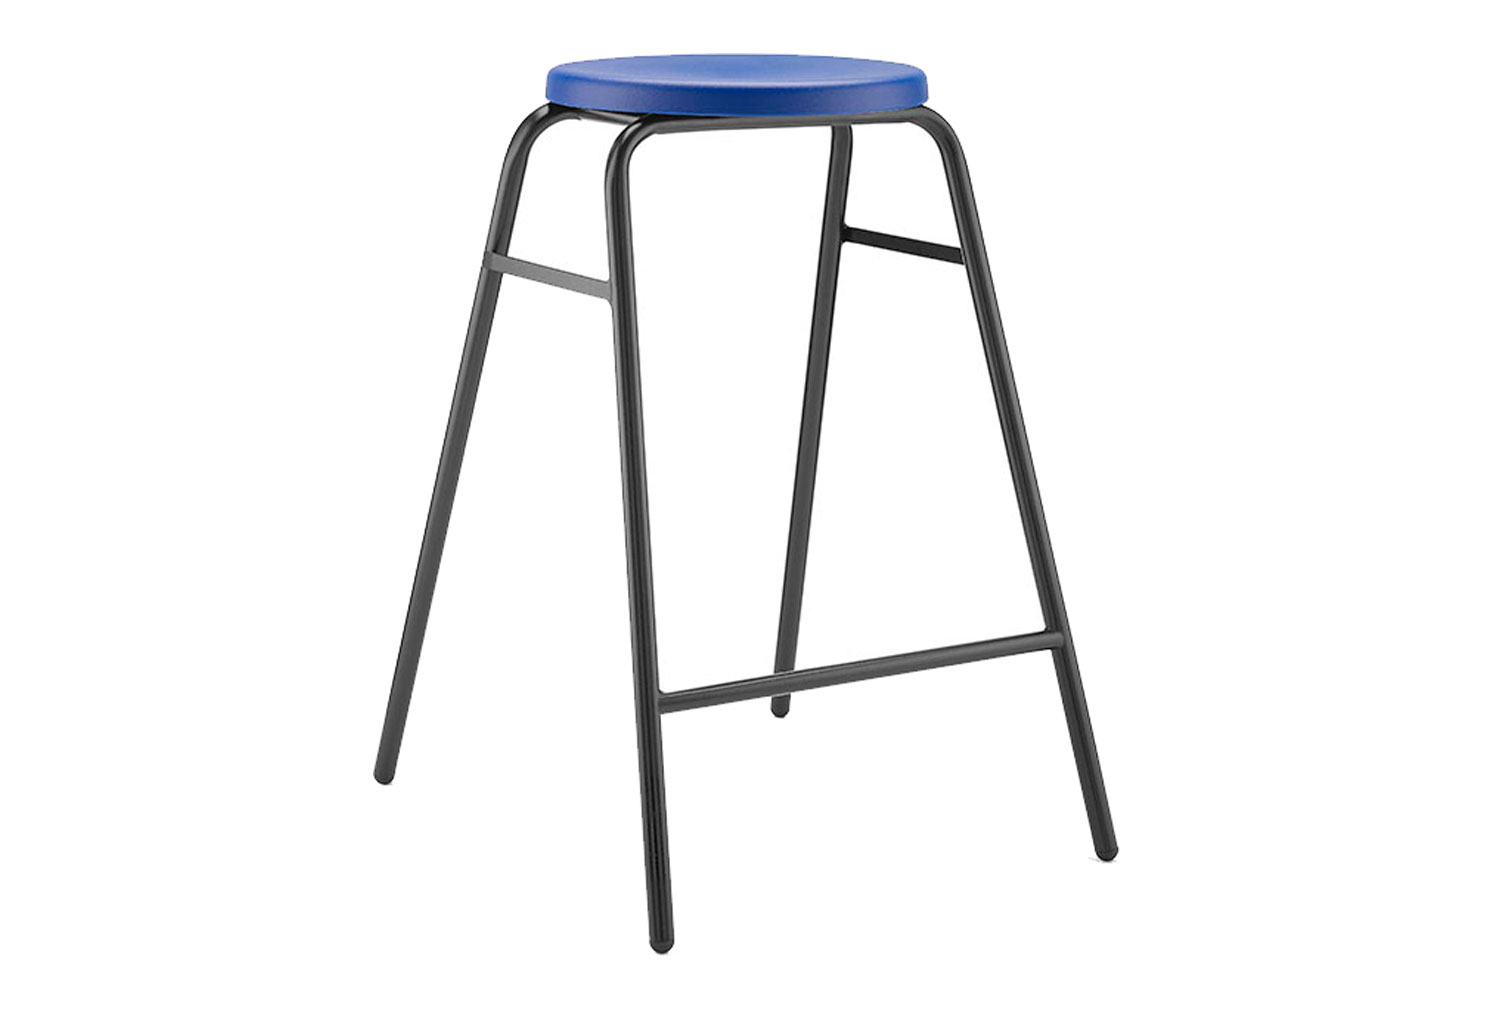 Qty 8 - Hille Polypropylene Round Top Classroom Stool, 43h (cm), Black Frame, Blue